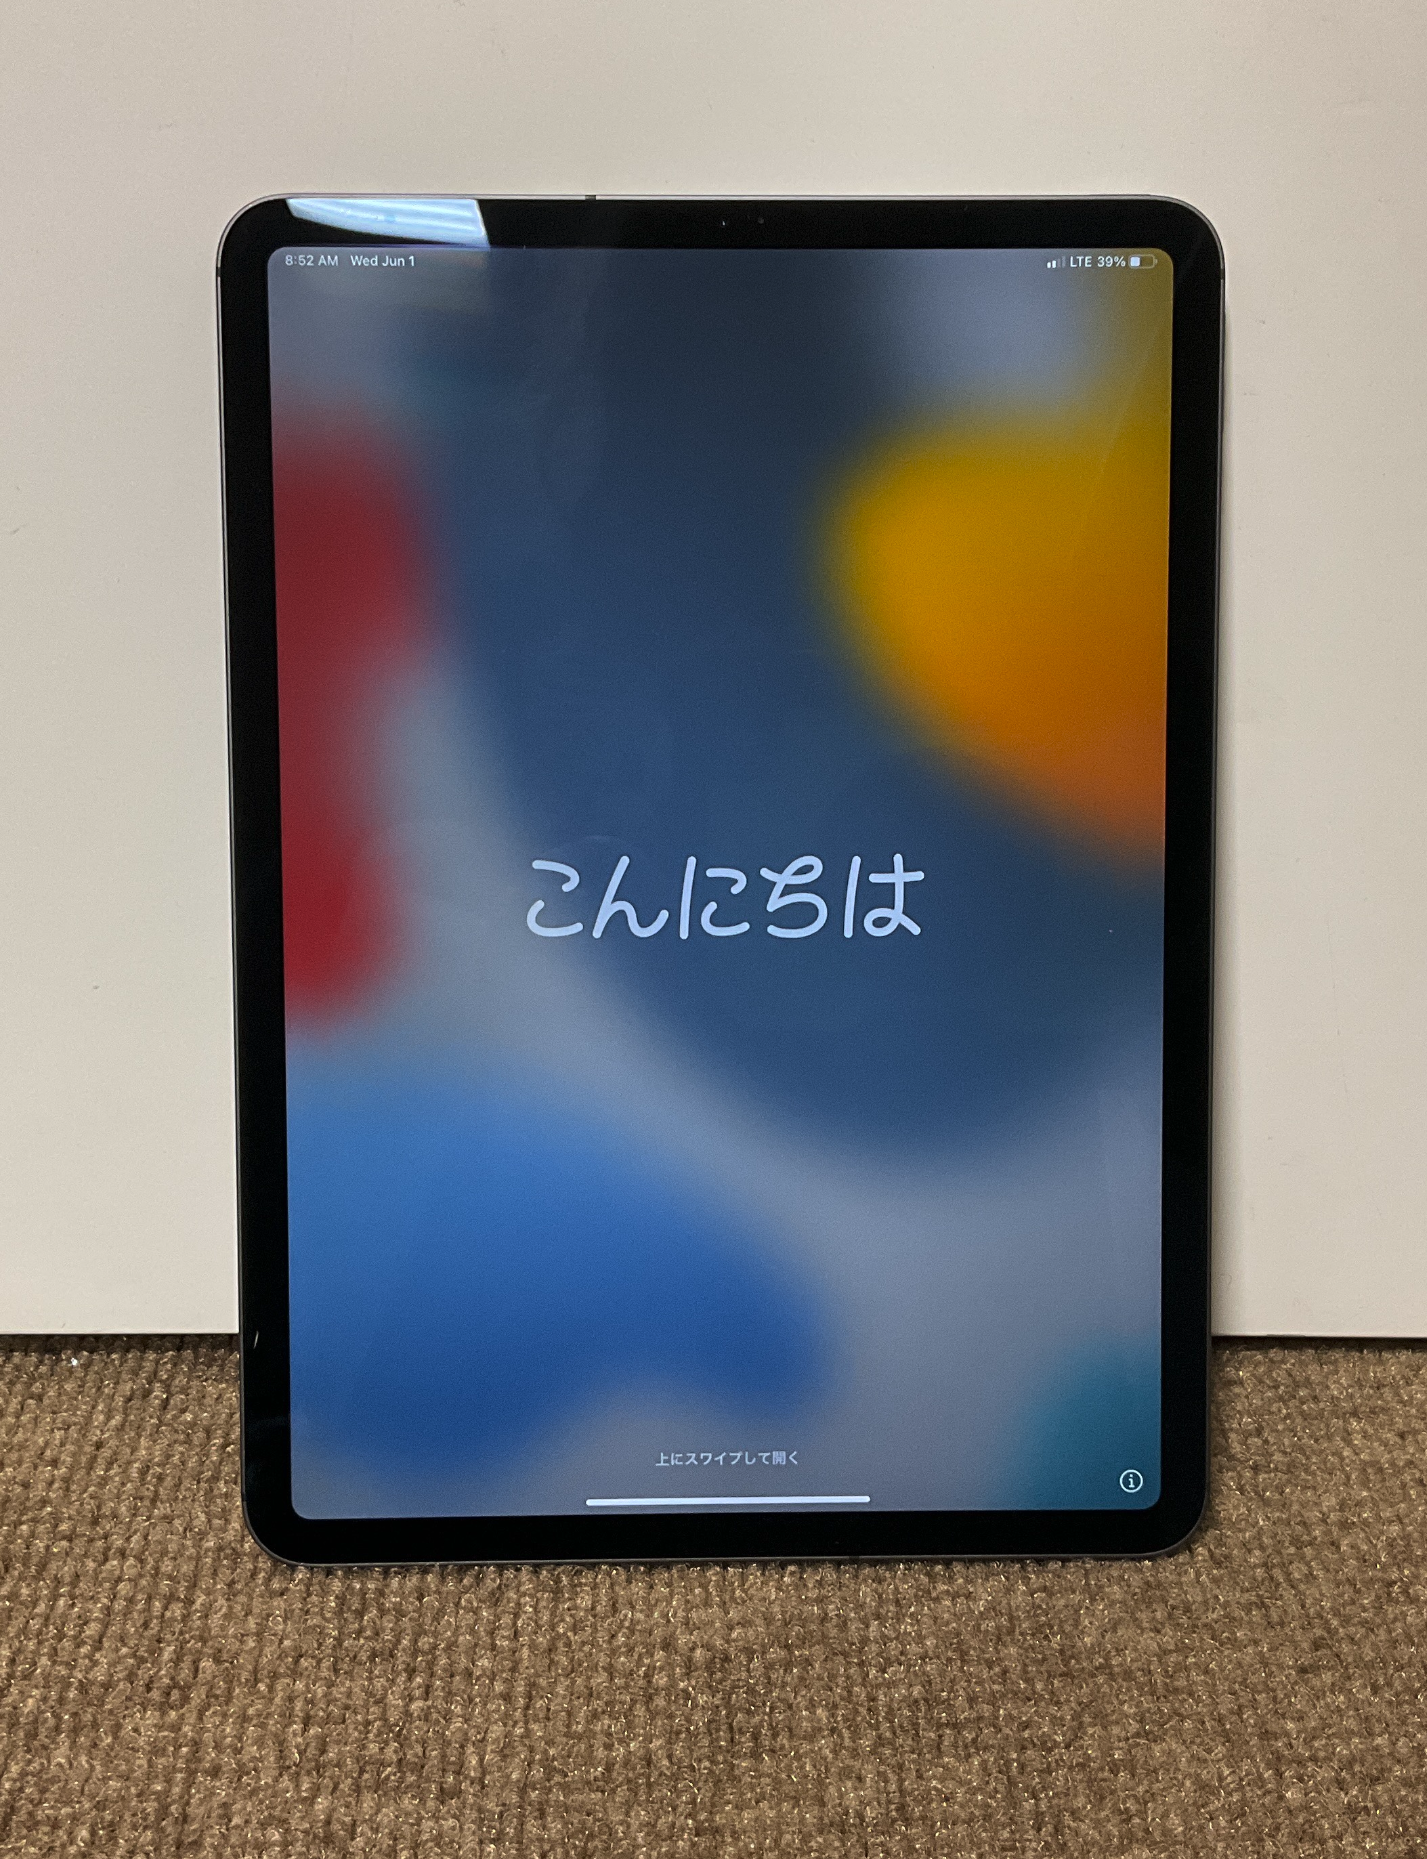 ♥ New, Open Box - iPad Pro 11" 64GB Wi-Fi + 4G LTE Space Gray MU0P2LL/A (2018)